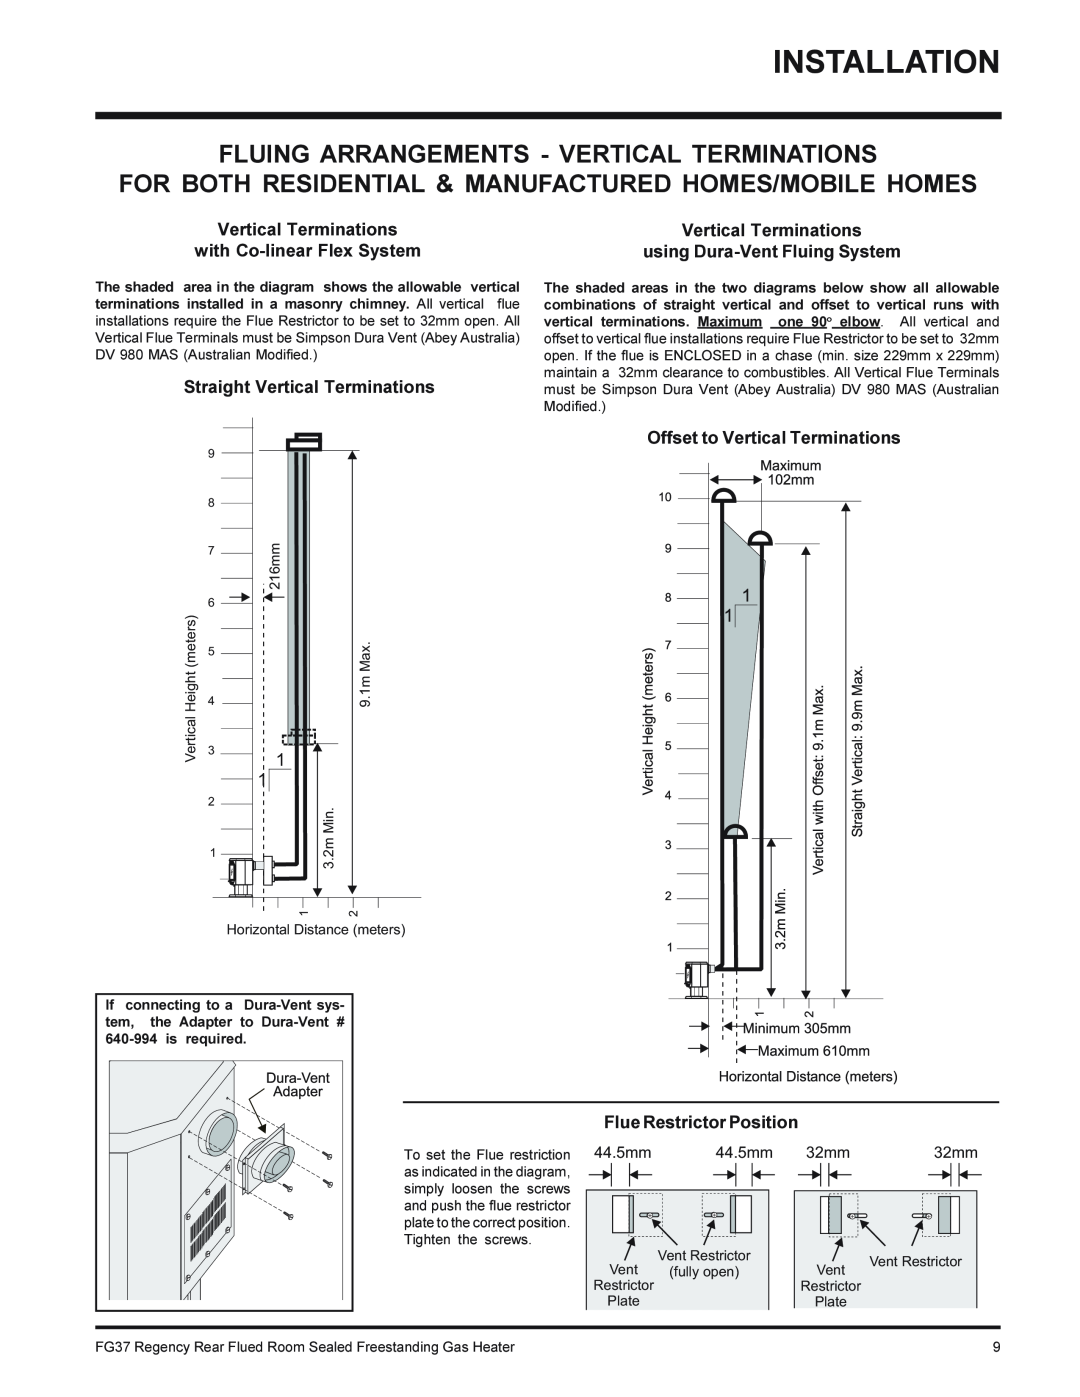 Regency FG37-NG, FG37-LPG Fluing Arrangements - Vertical Terminations, Vertical Terminations with Co-linearFlex System 